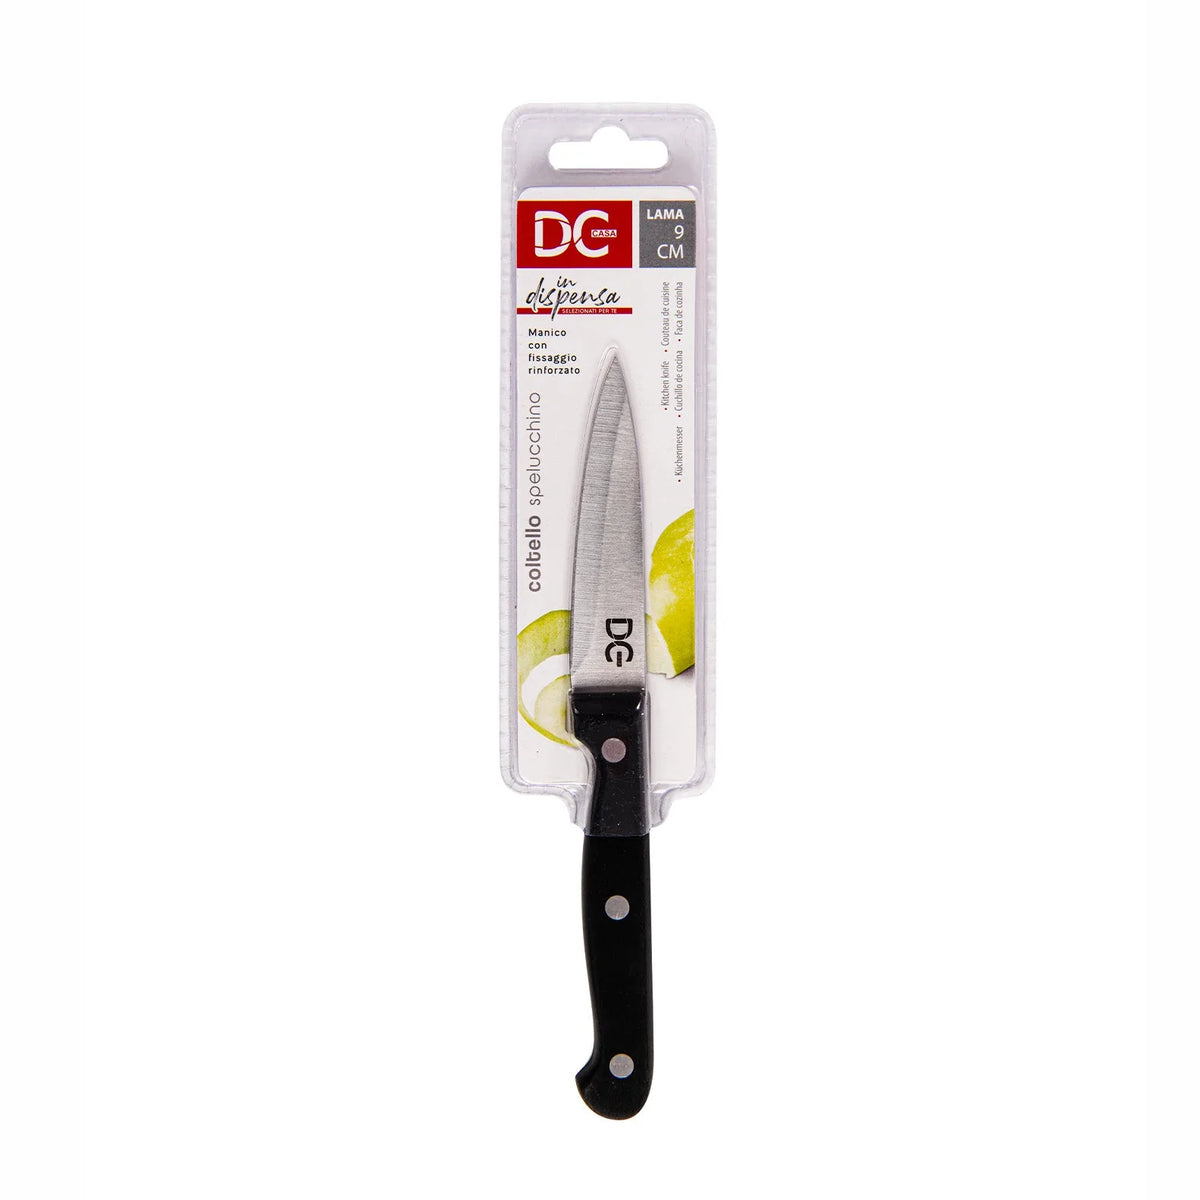 Spelchcchino steel knife with black ergonomic handle - 9cm